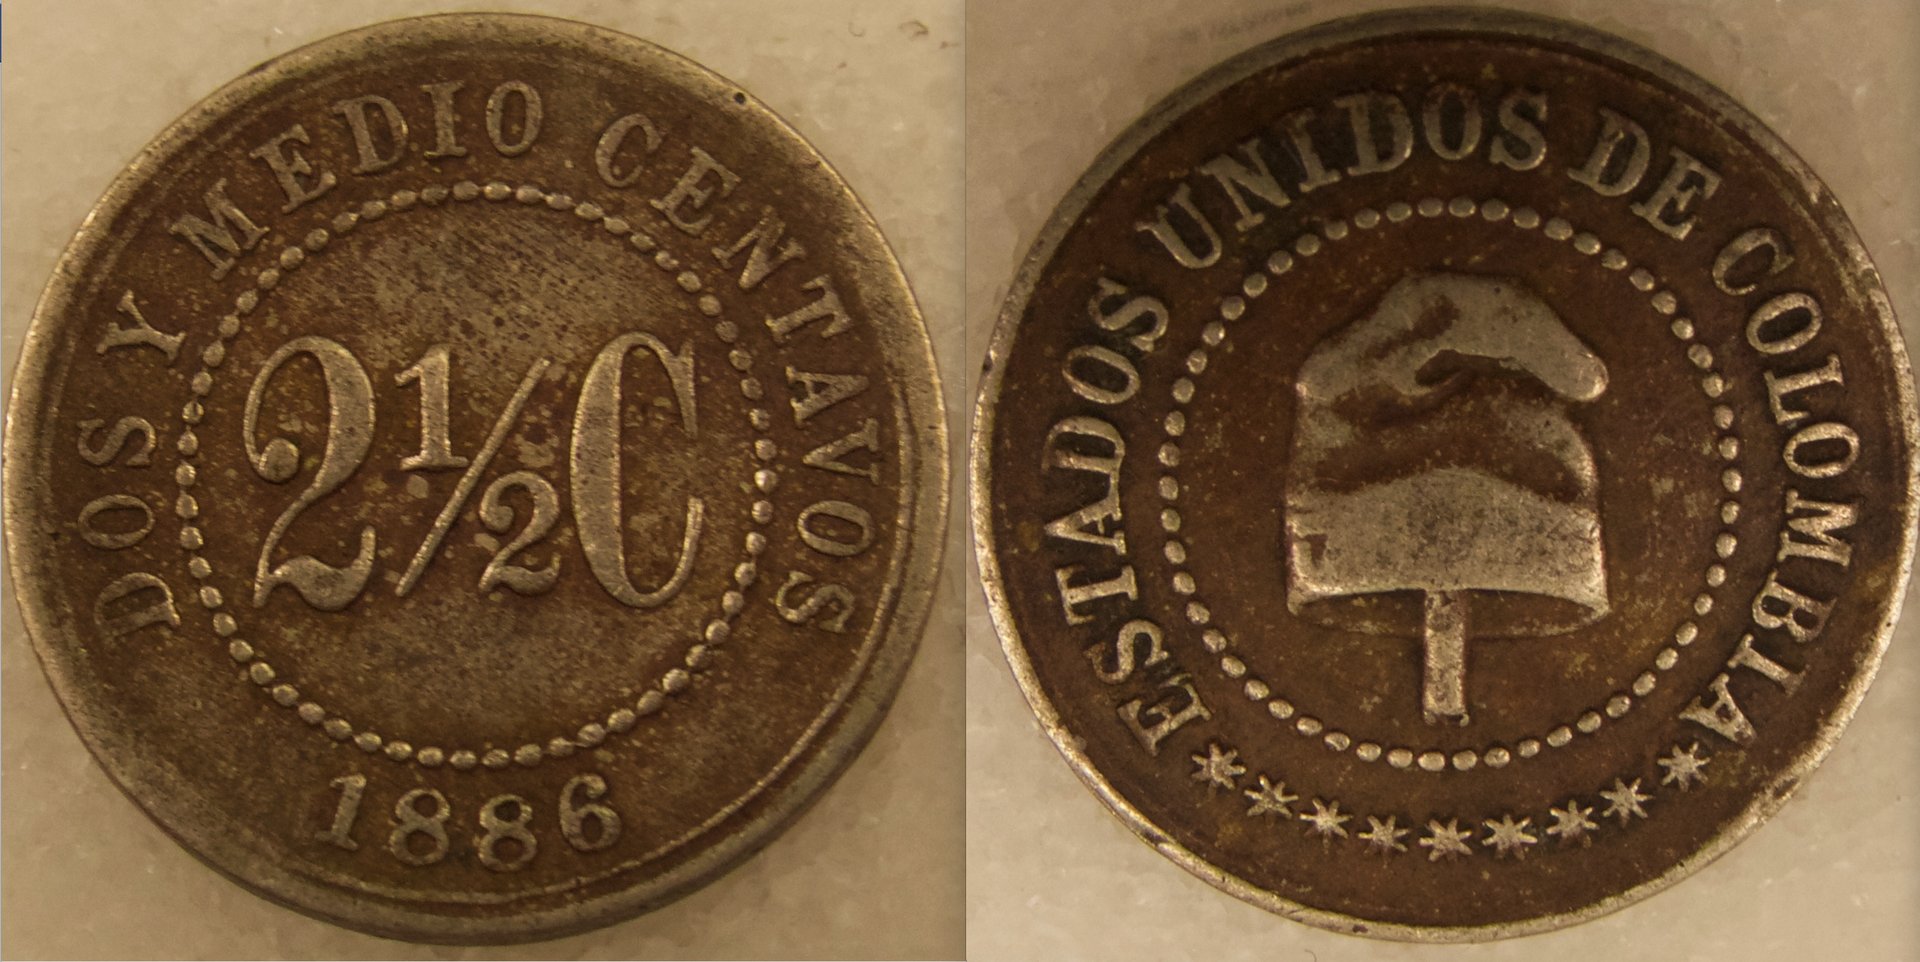 2.5 Centavo 1886 Colombia copy.jpeg